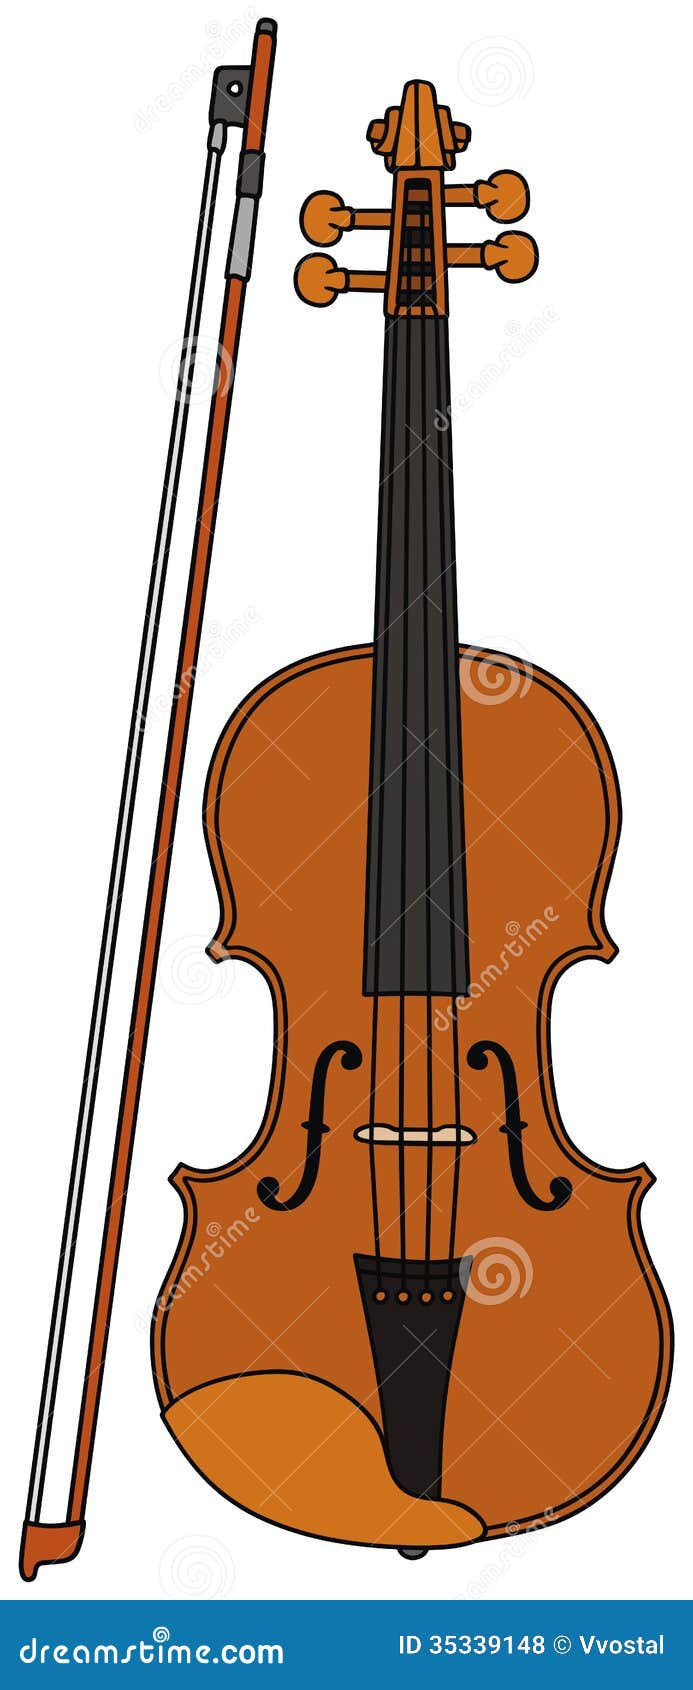 Violin stock vector. Illustration of music, gosling, classical - 35339148